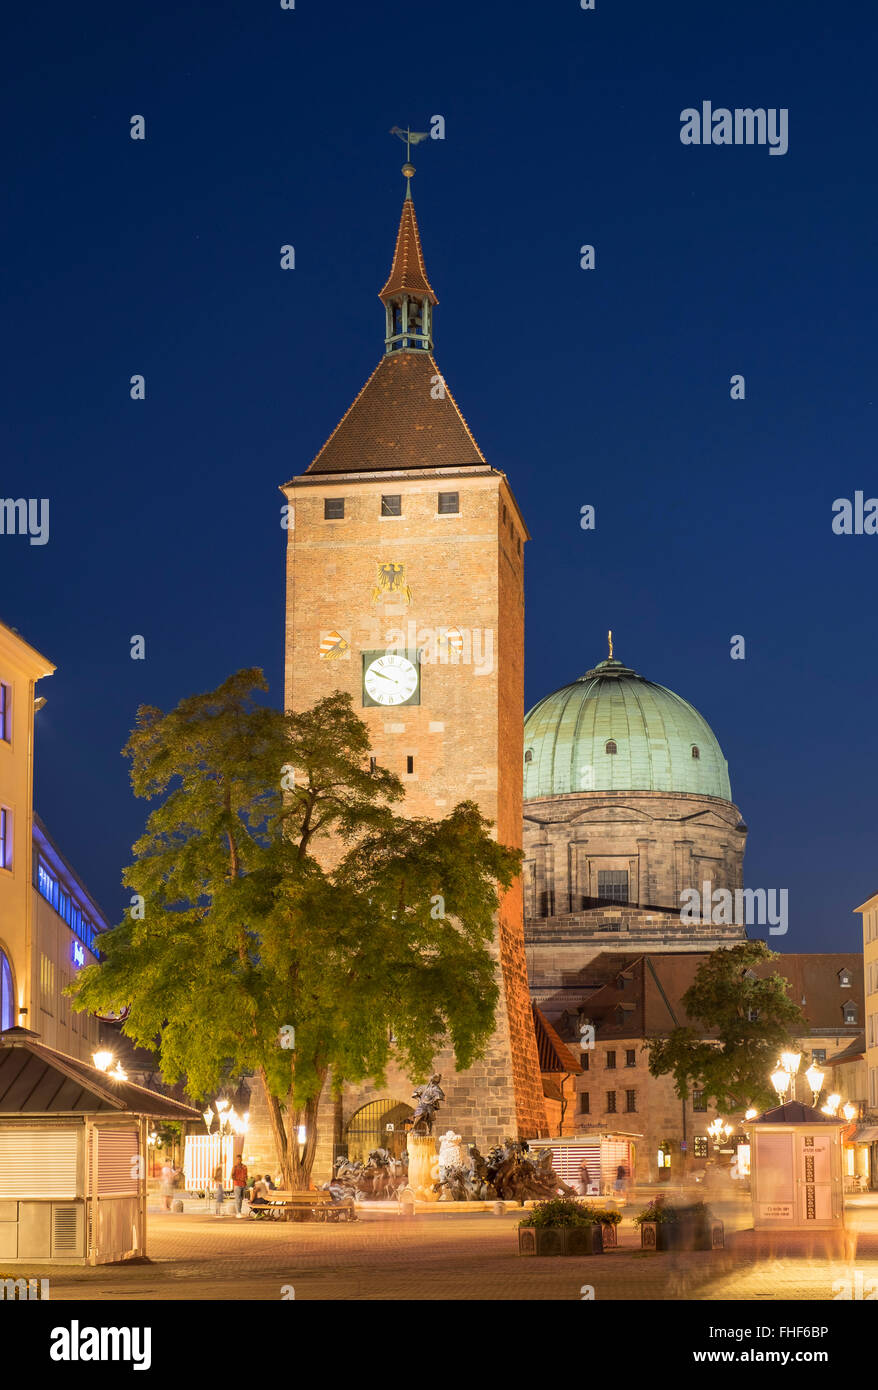 White Tower and St. Elizabeth's church at night, Lorenzer Altstadt, Nuremberg, Middle Franconia, Franconia, Bavaria, Germany Stock Photo